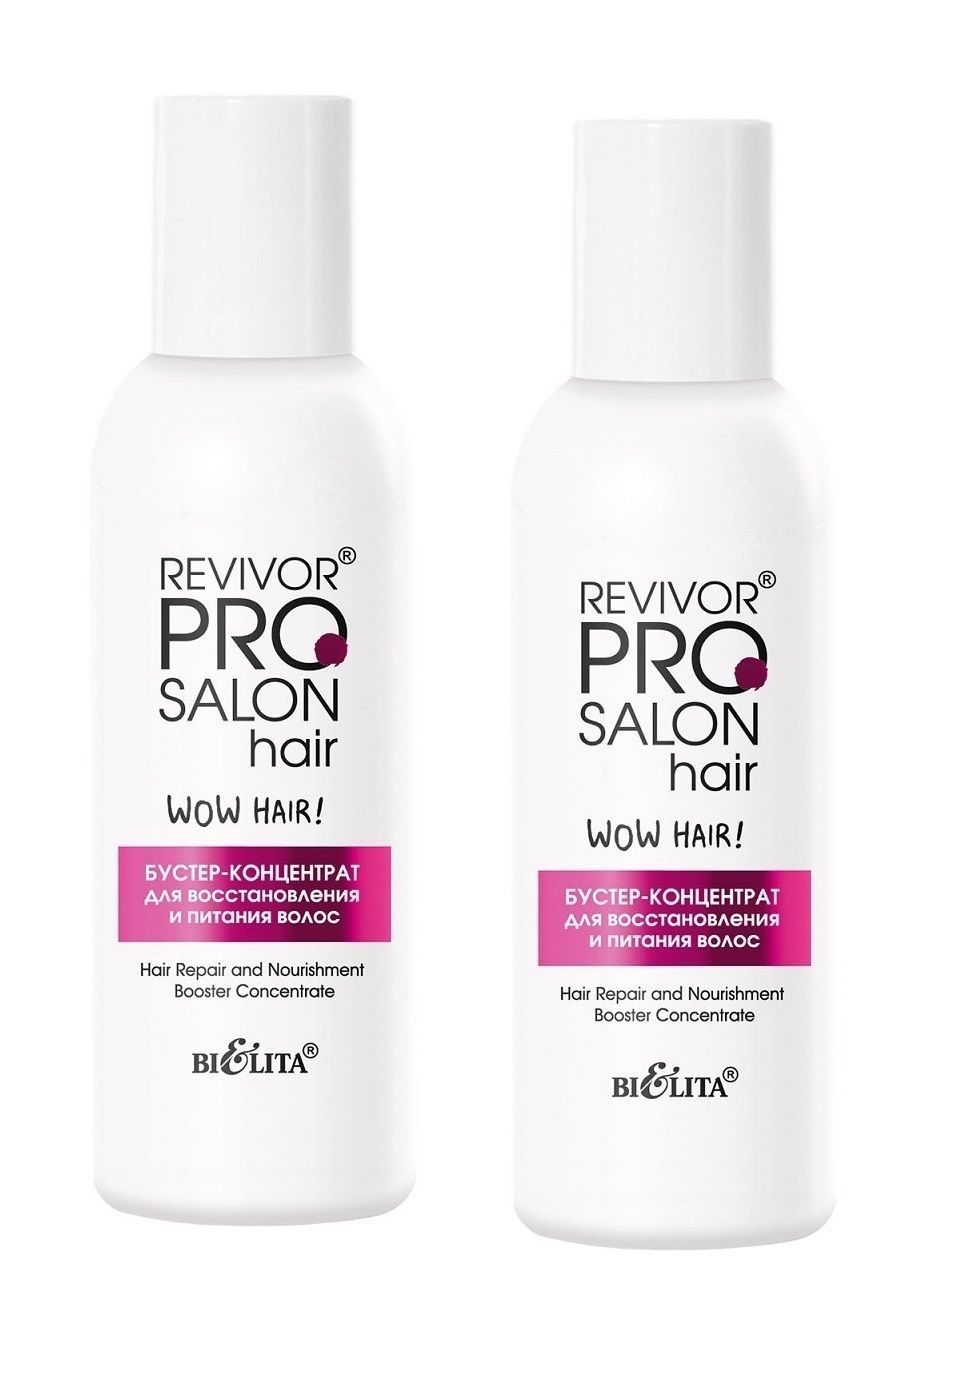 Revivor Pro Salon hair. Концентрат бустер для волос. Концентрат бустер для восстановления волос